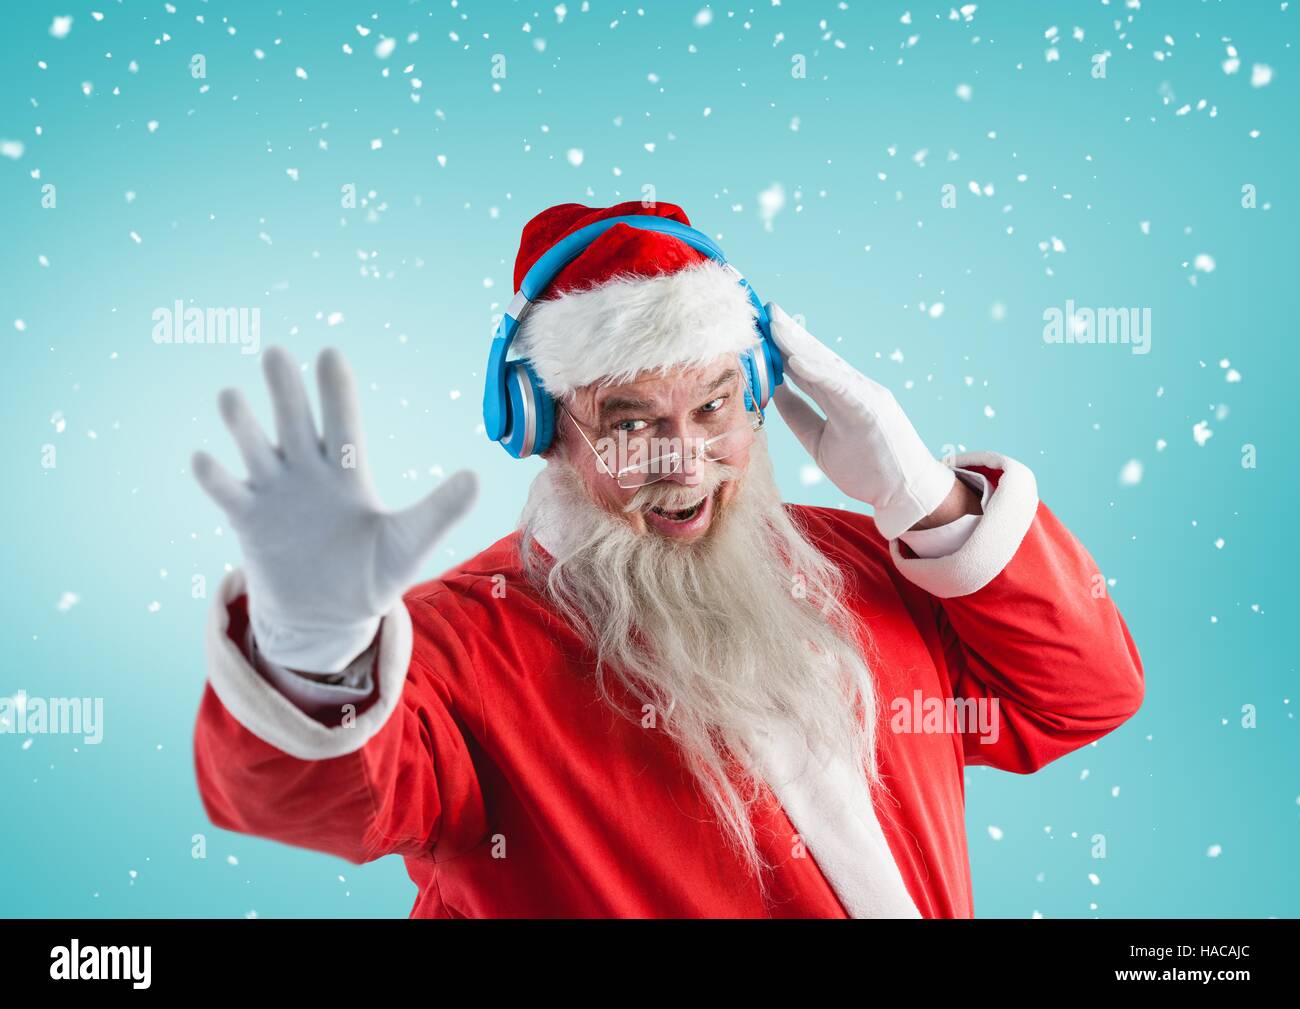 Santa gesturing while listening music on headphones Stock Photo